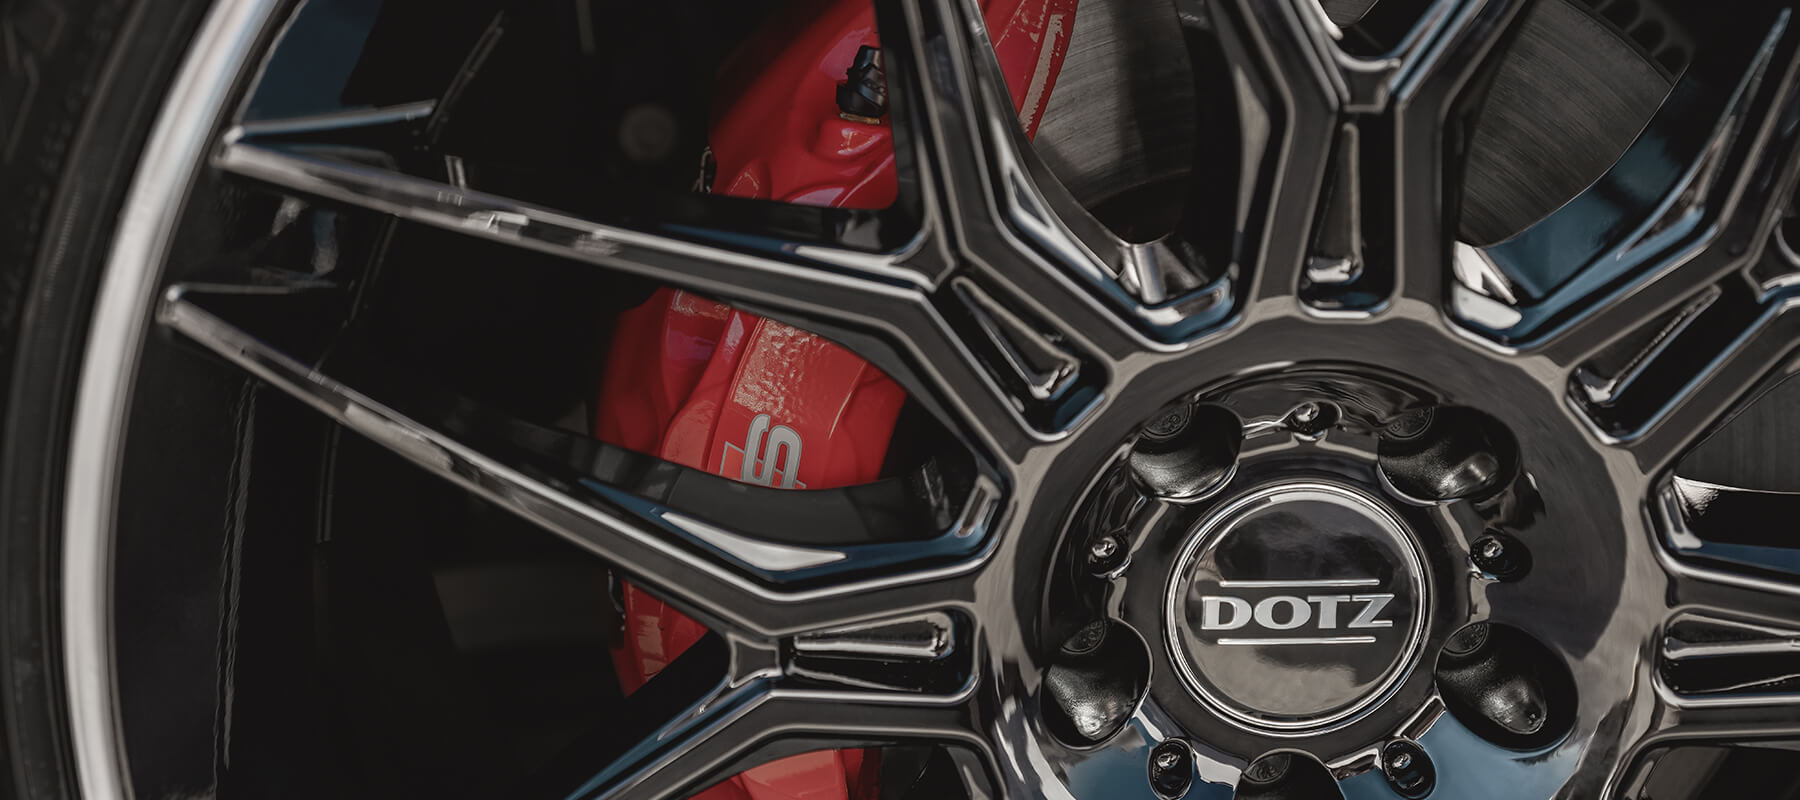 DOTZ LongBeach black – The dream partner for the BMW X5